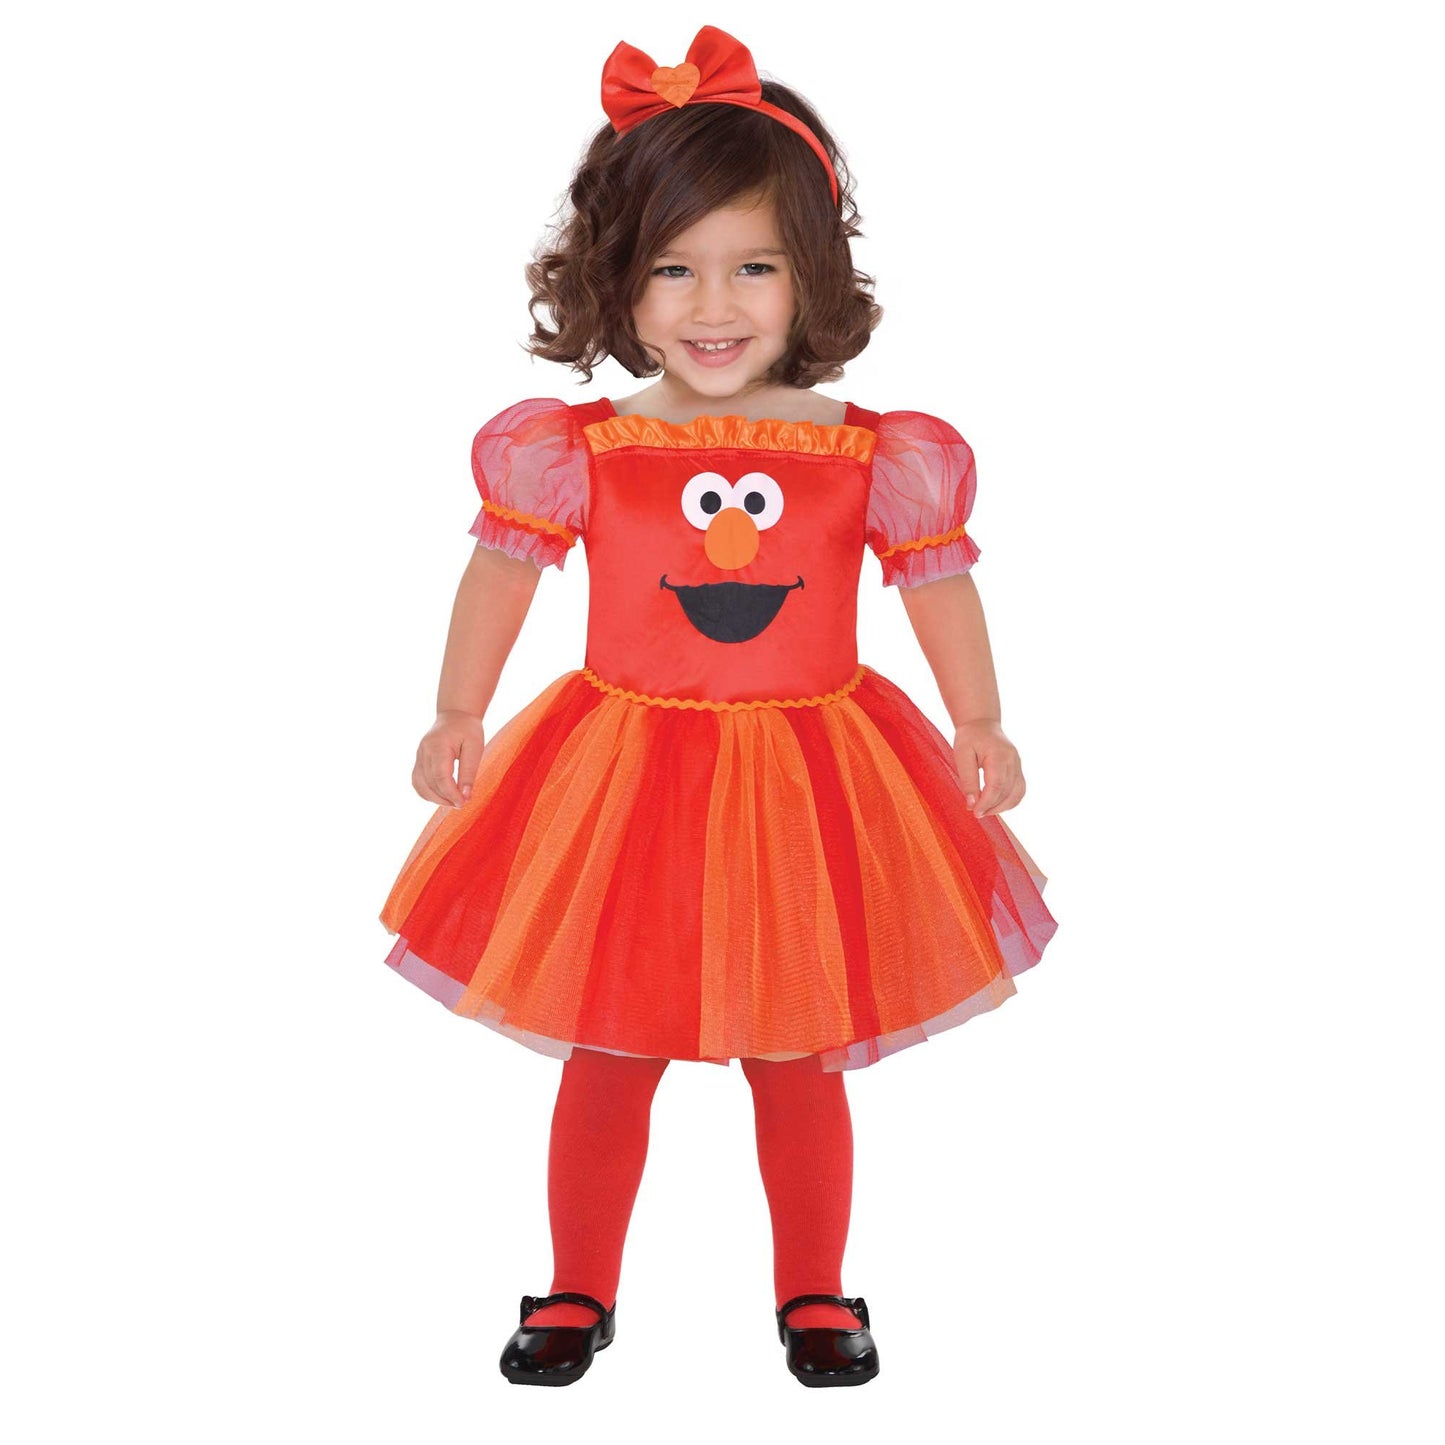 Costume Elmo Girls 18-24 Months